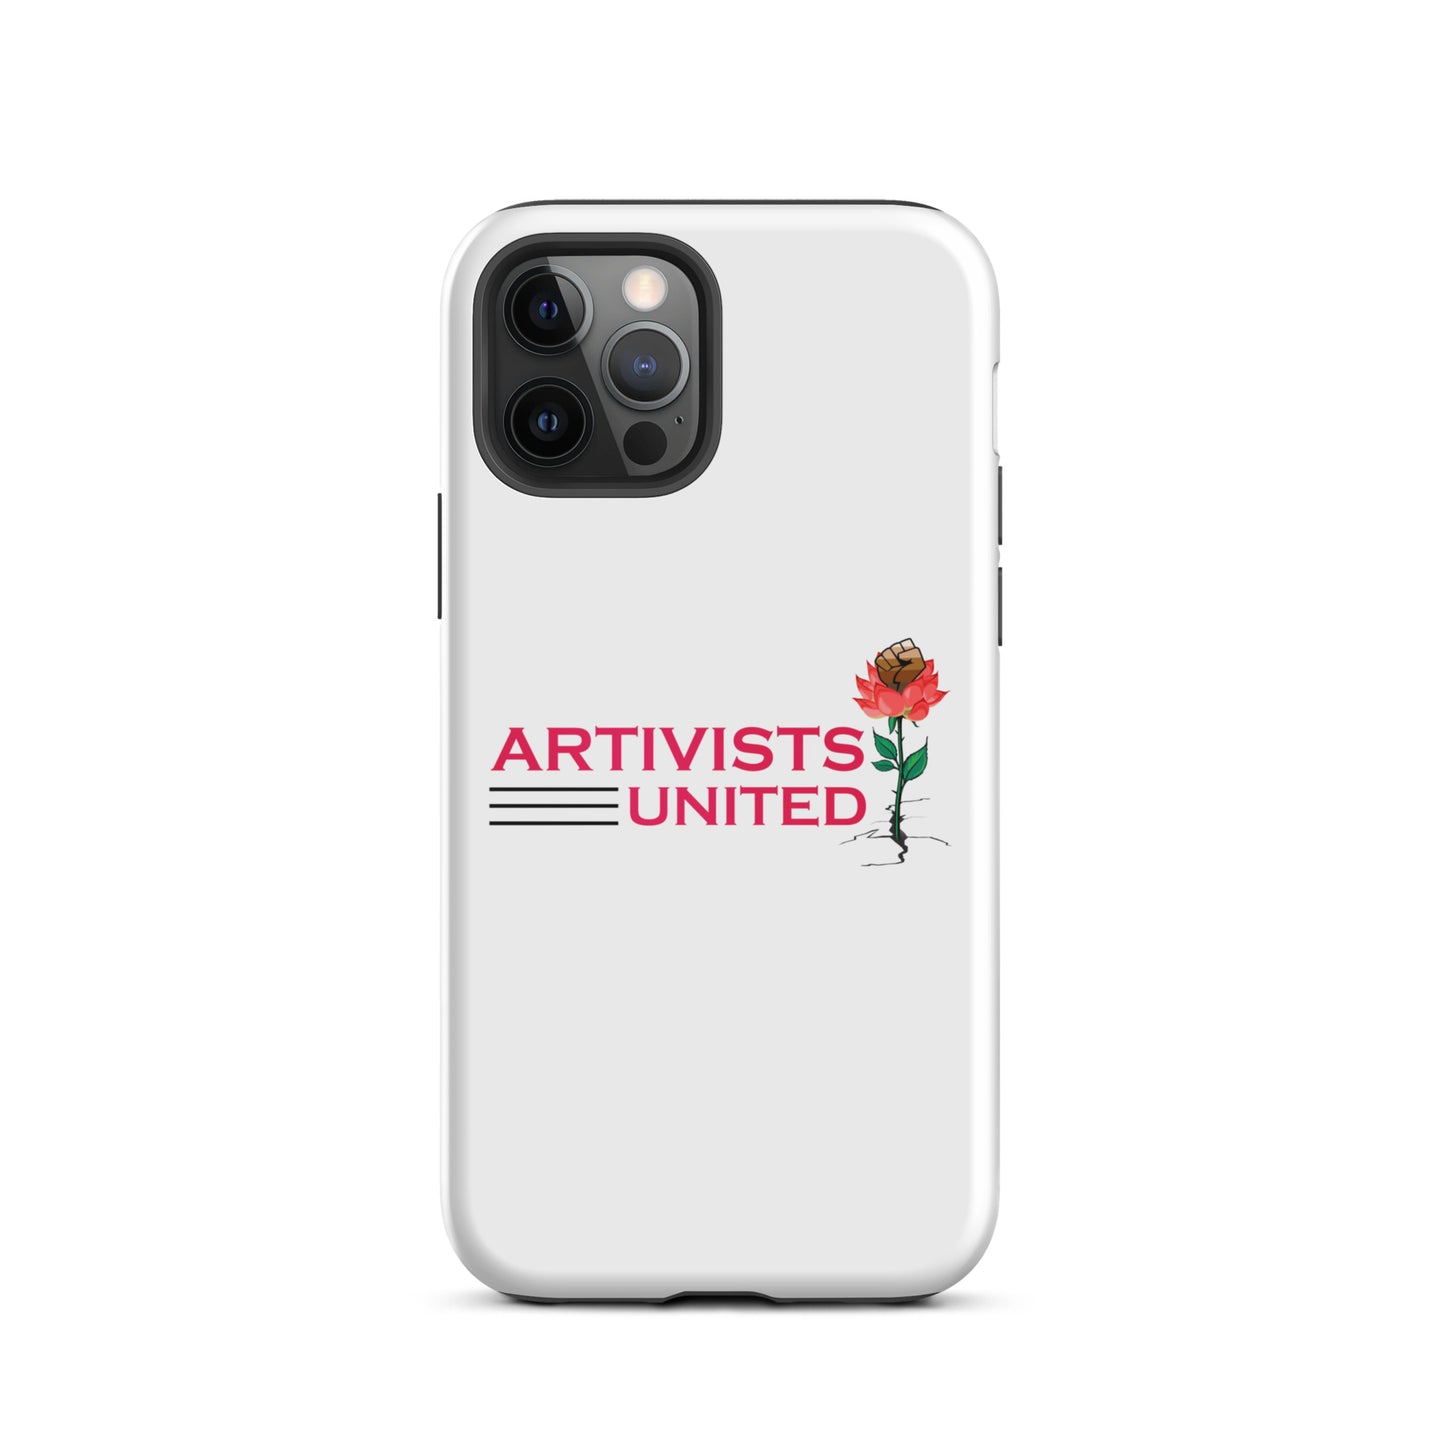 Artivists United Iphone case